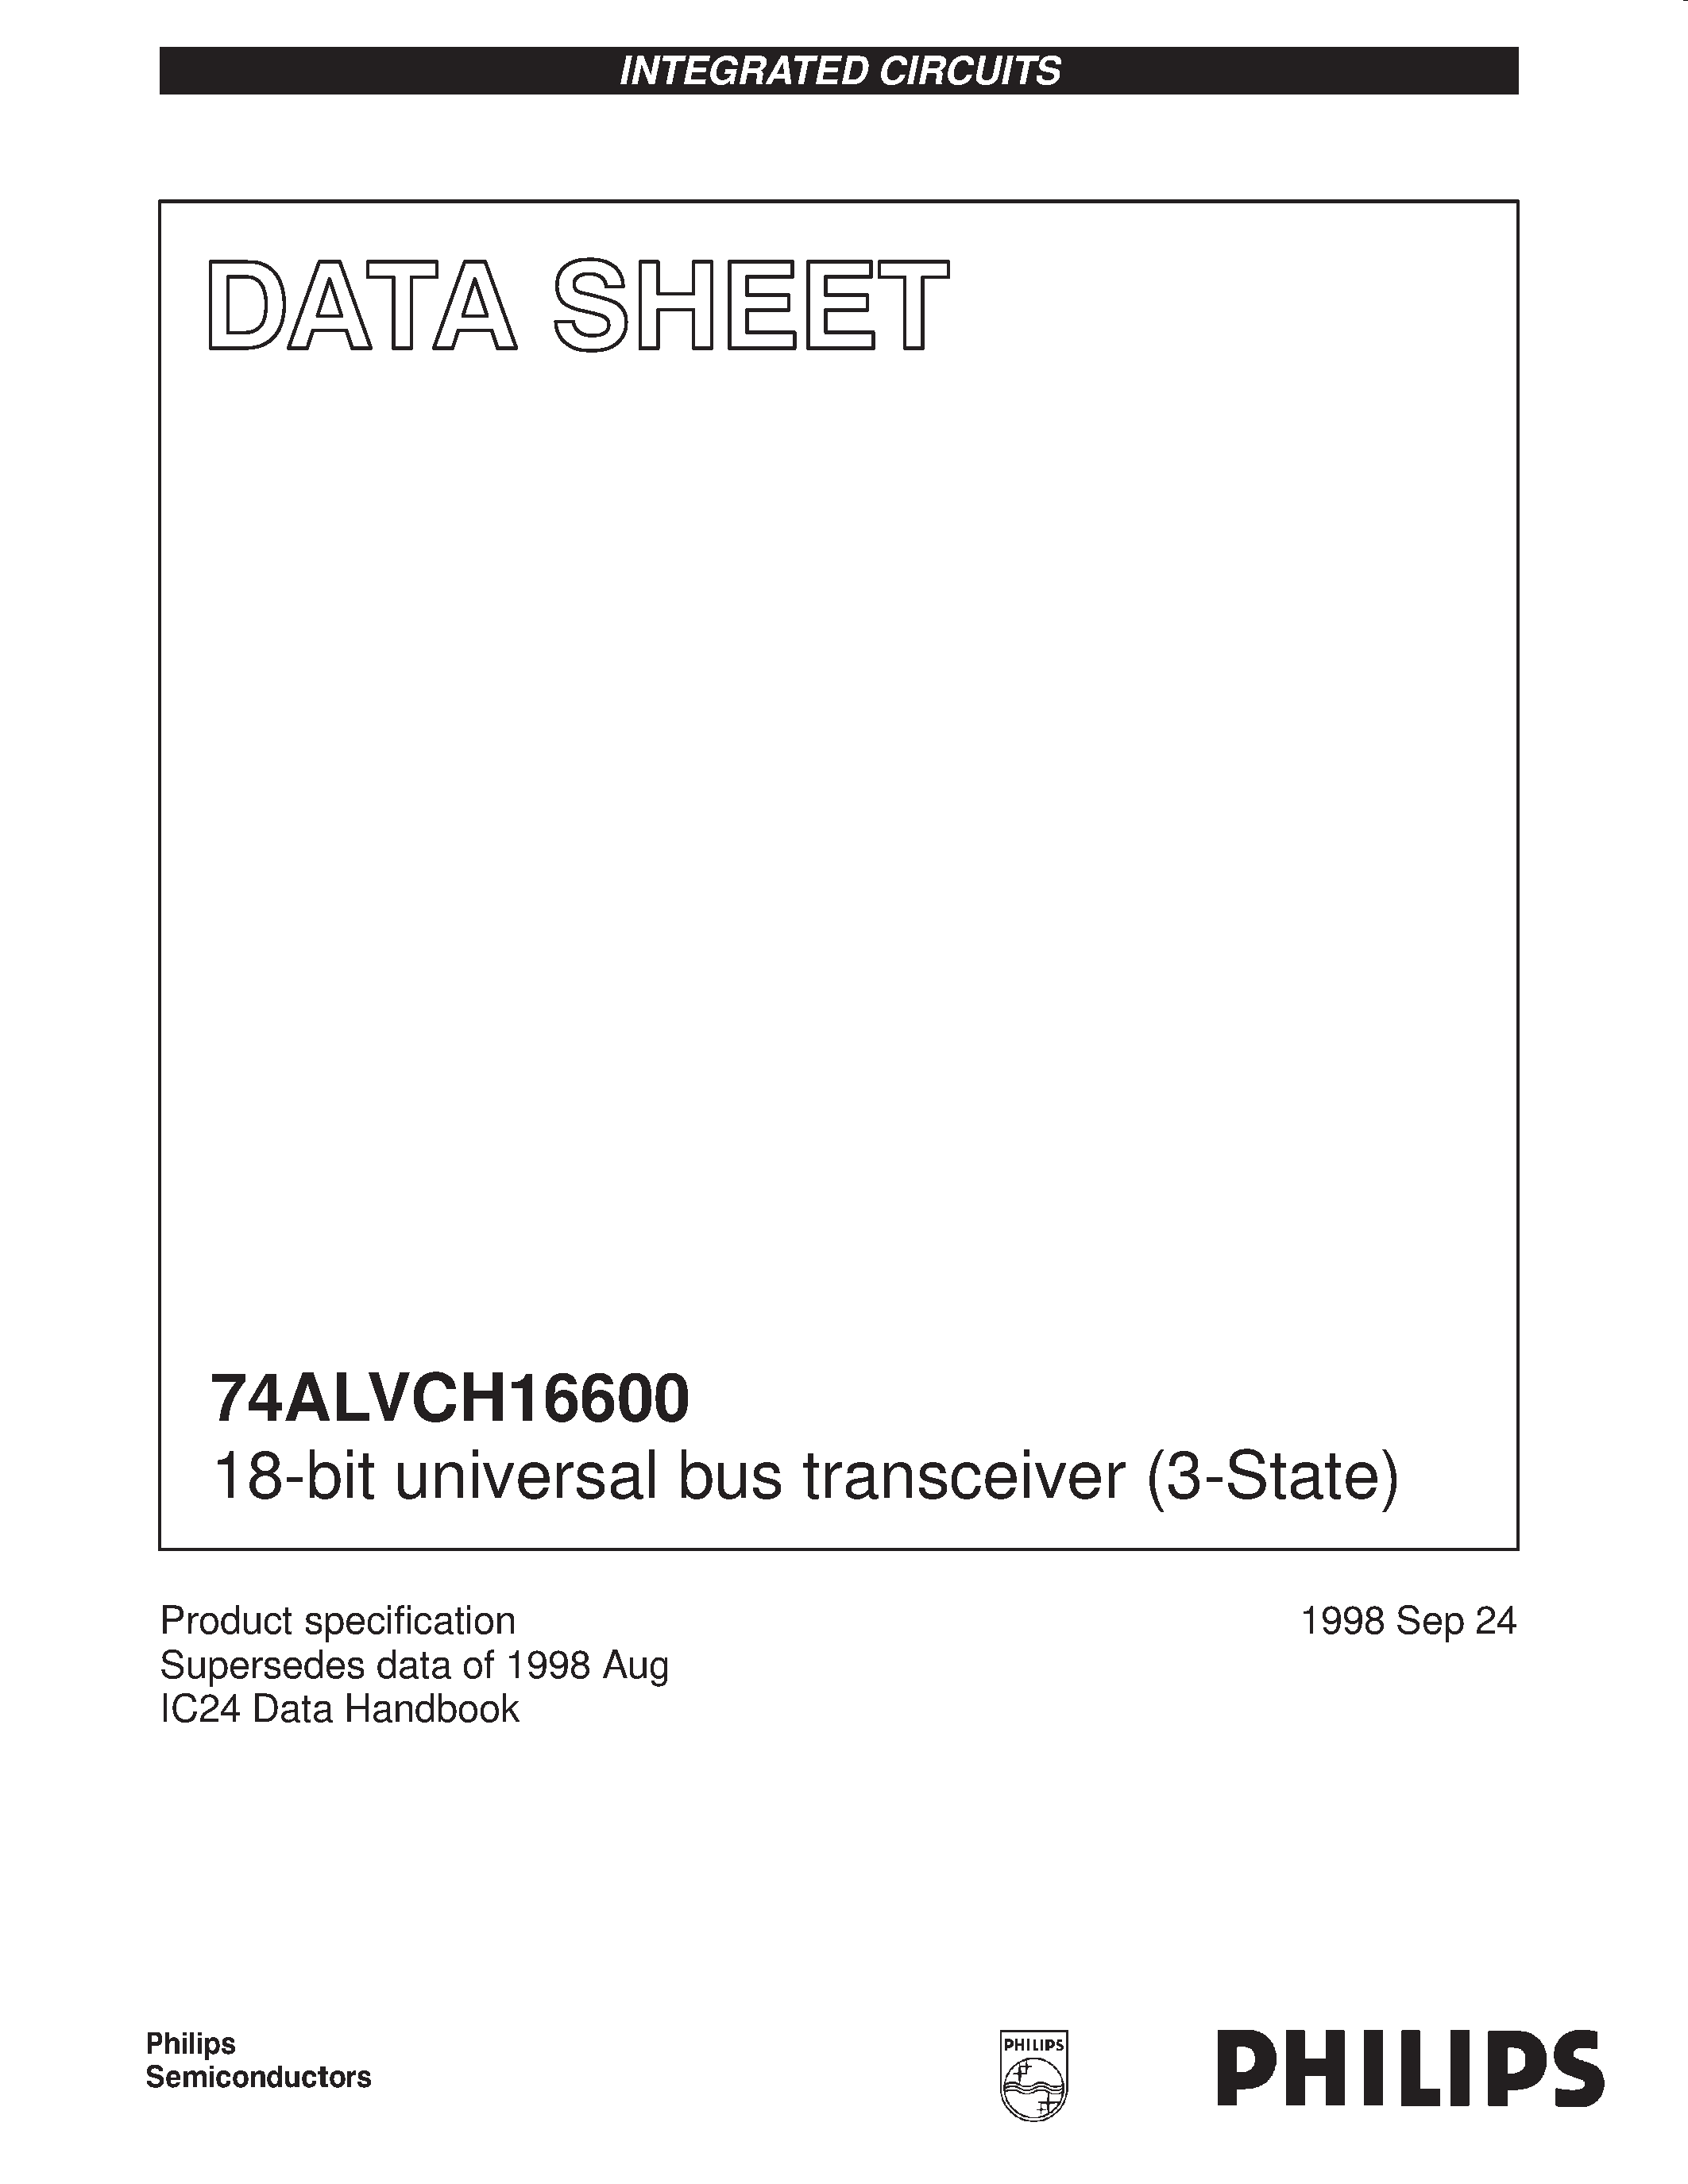 Даташит 74ALVCH16600DGG - 18-bit universal bus transceiver 3-State страница 1